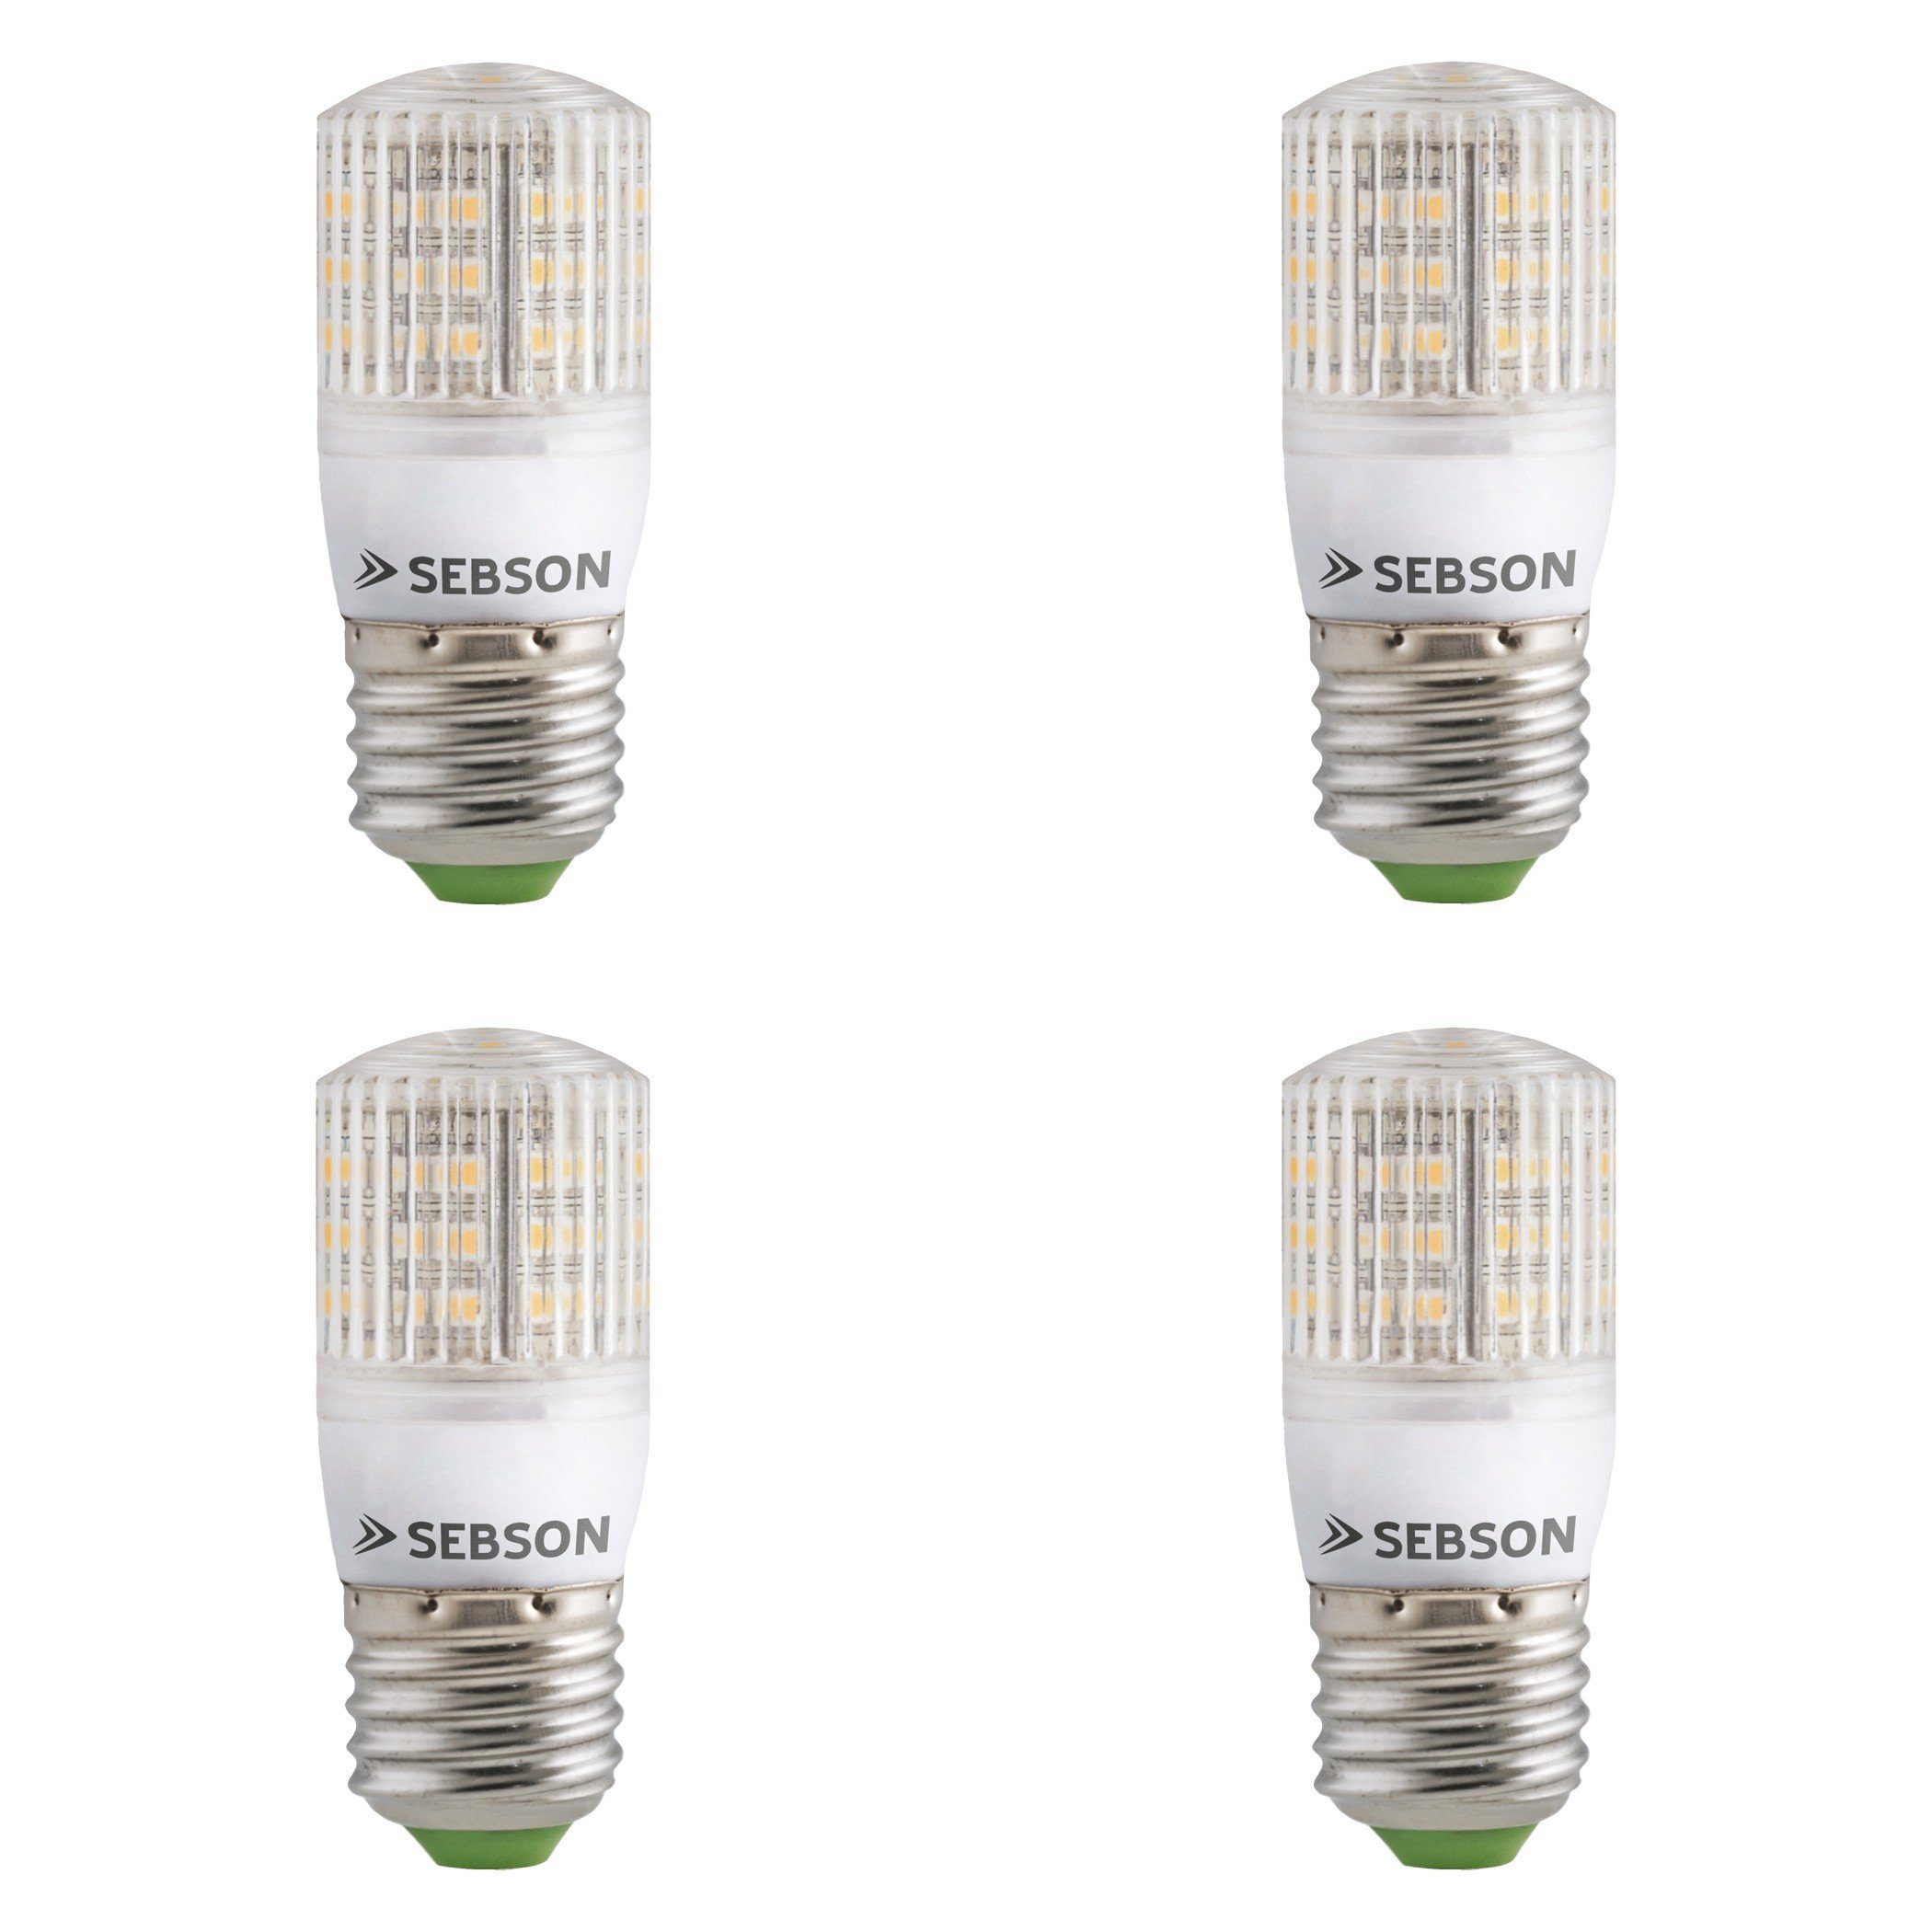 SEBSON LED-Leuchtmittel 4er Pack E27 LED 3W Lampe - 240lm warmweiß Цибулини 280°